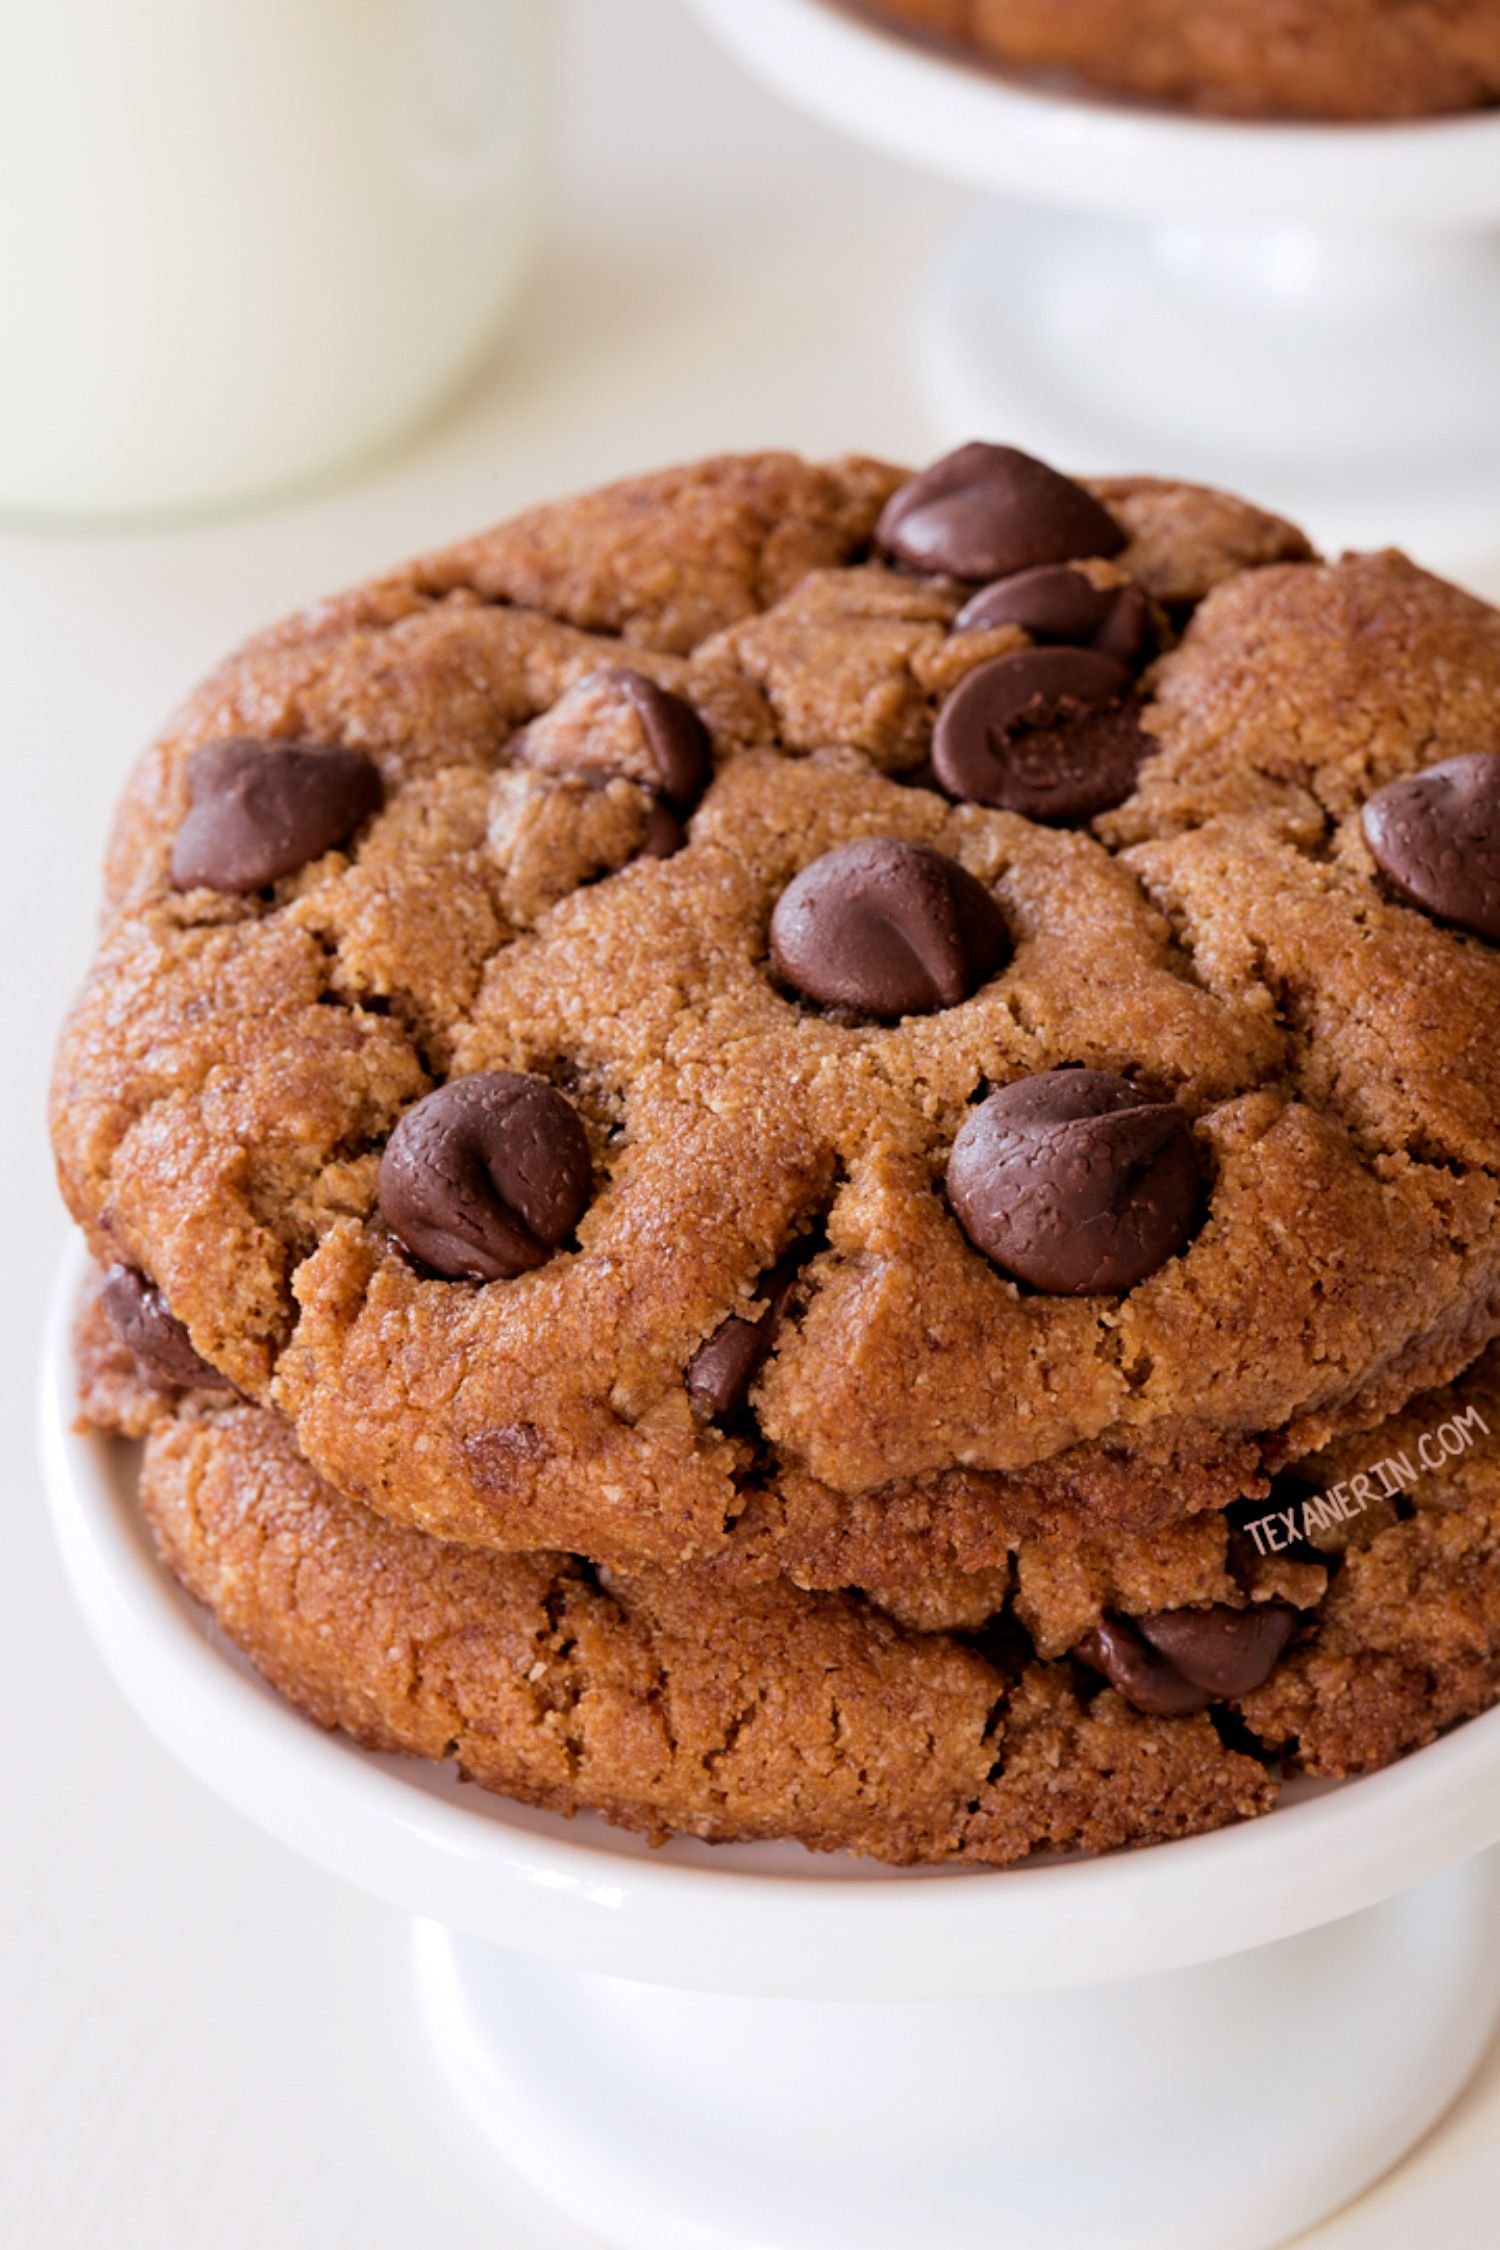 Печенье cookies с шоколадом. Американ кукис. Американское печенье кукис. Печенье Американ кукис с шоколадом. Печенье американер с шоколадом.